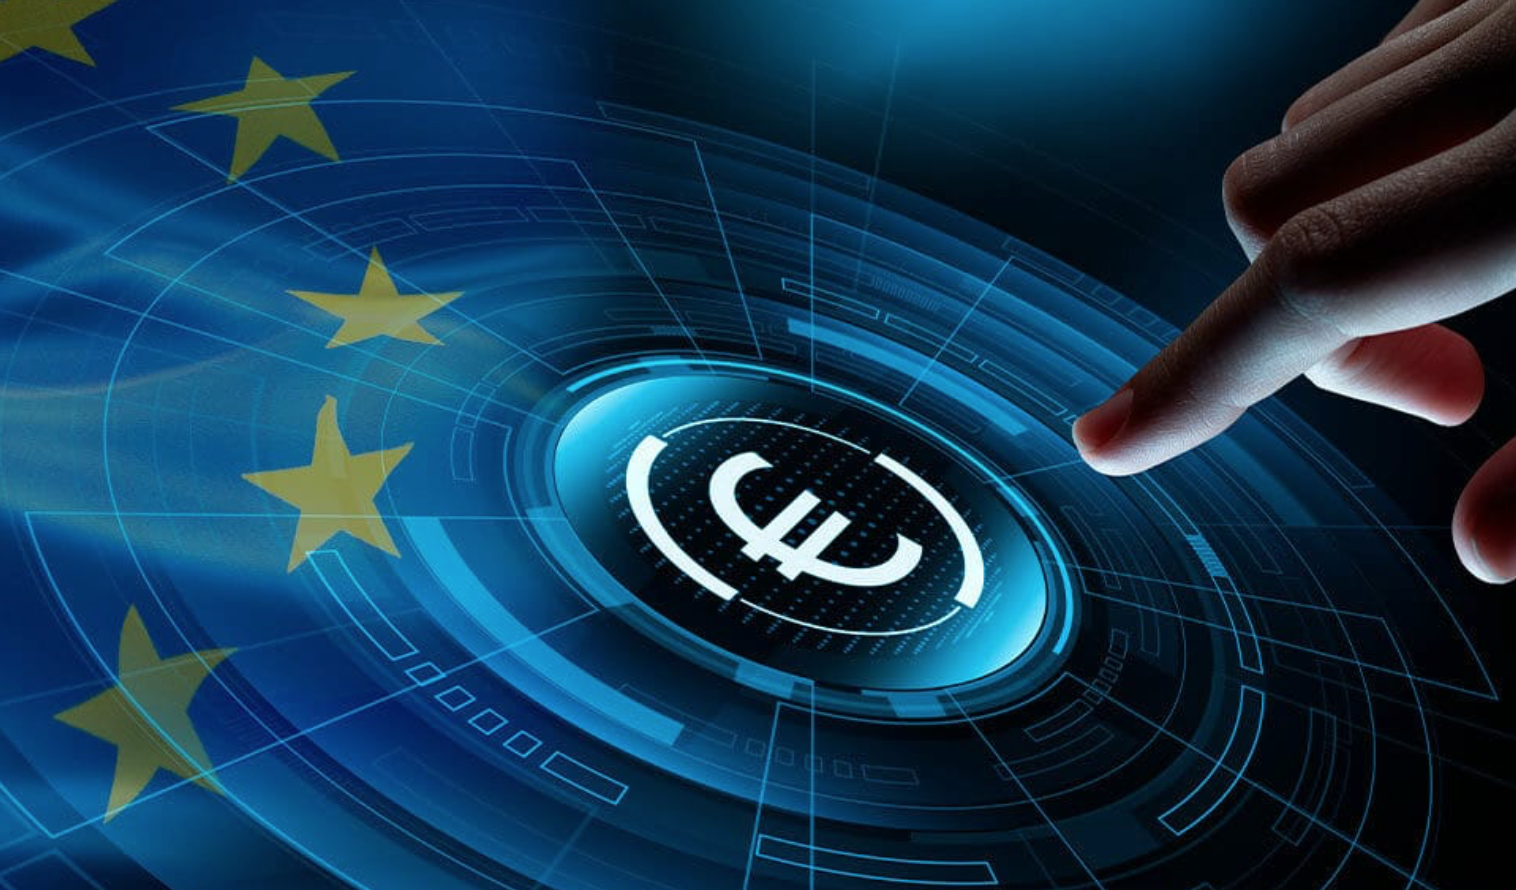 euro digital Europa bancos